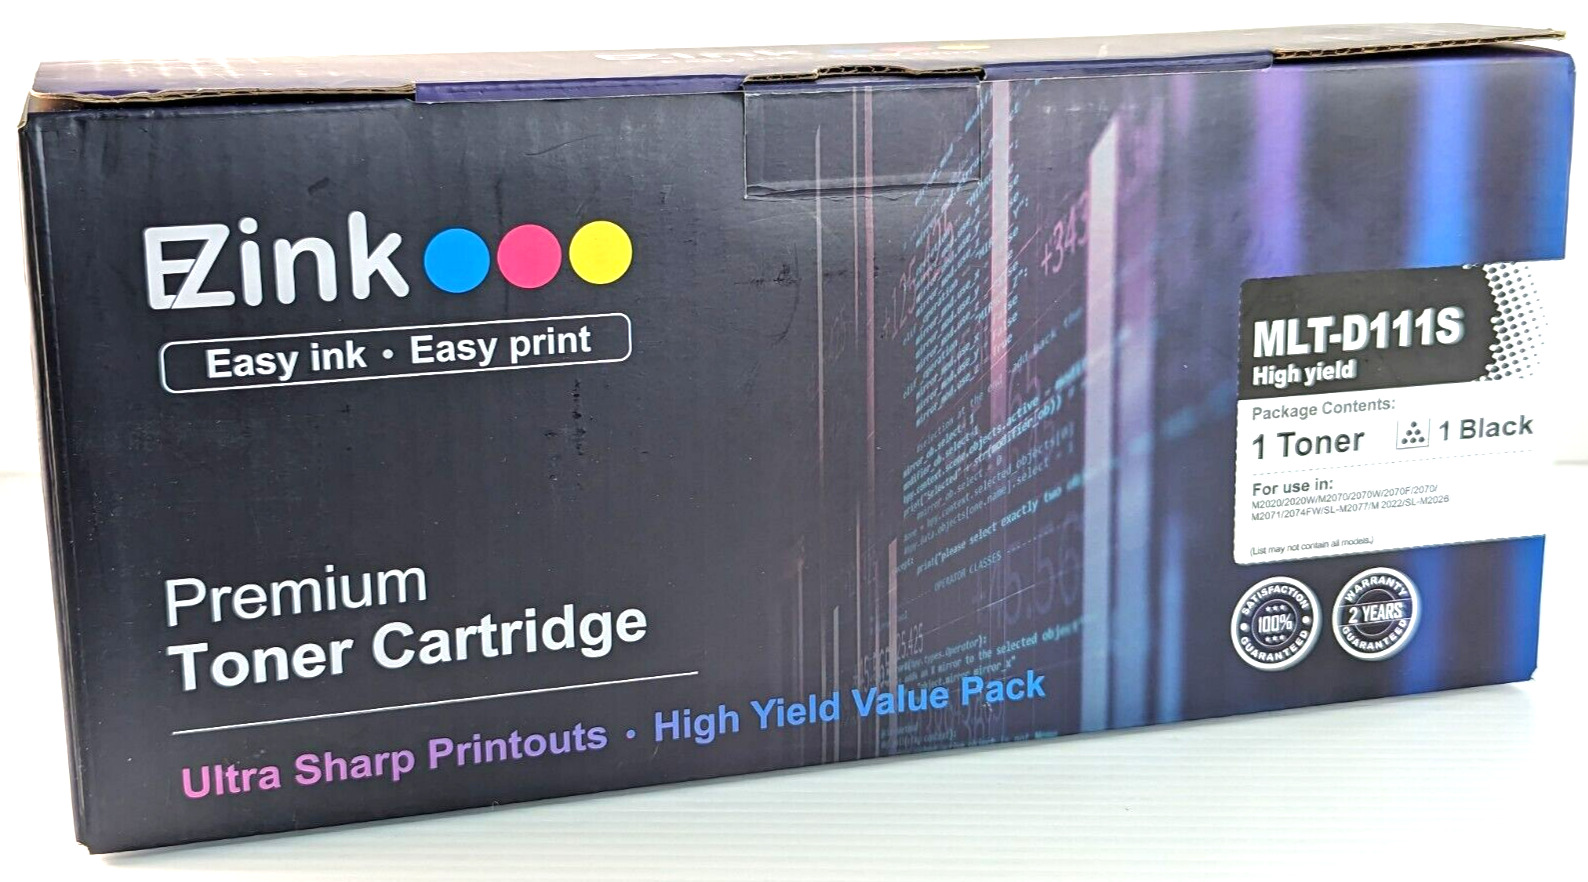 EZink Premium Toner Cartridge MLT-D111S High yield 1 Pack